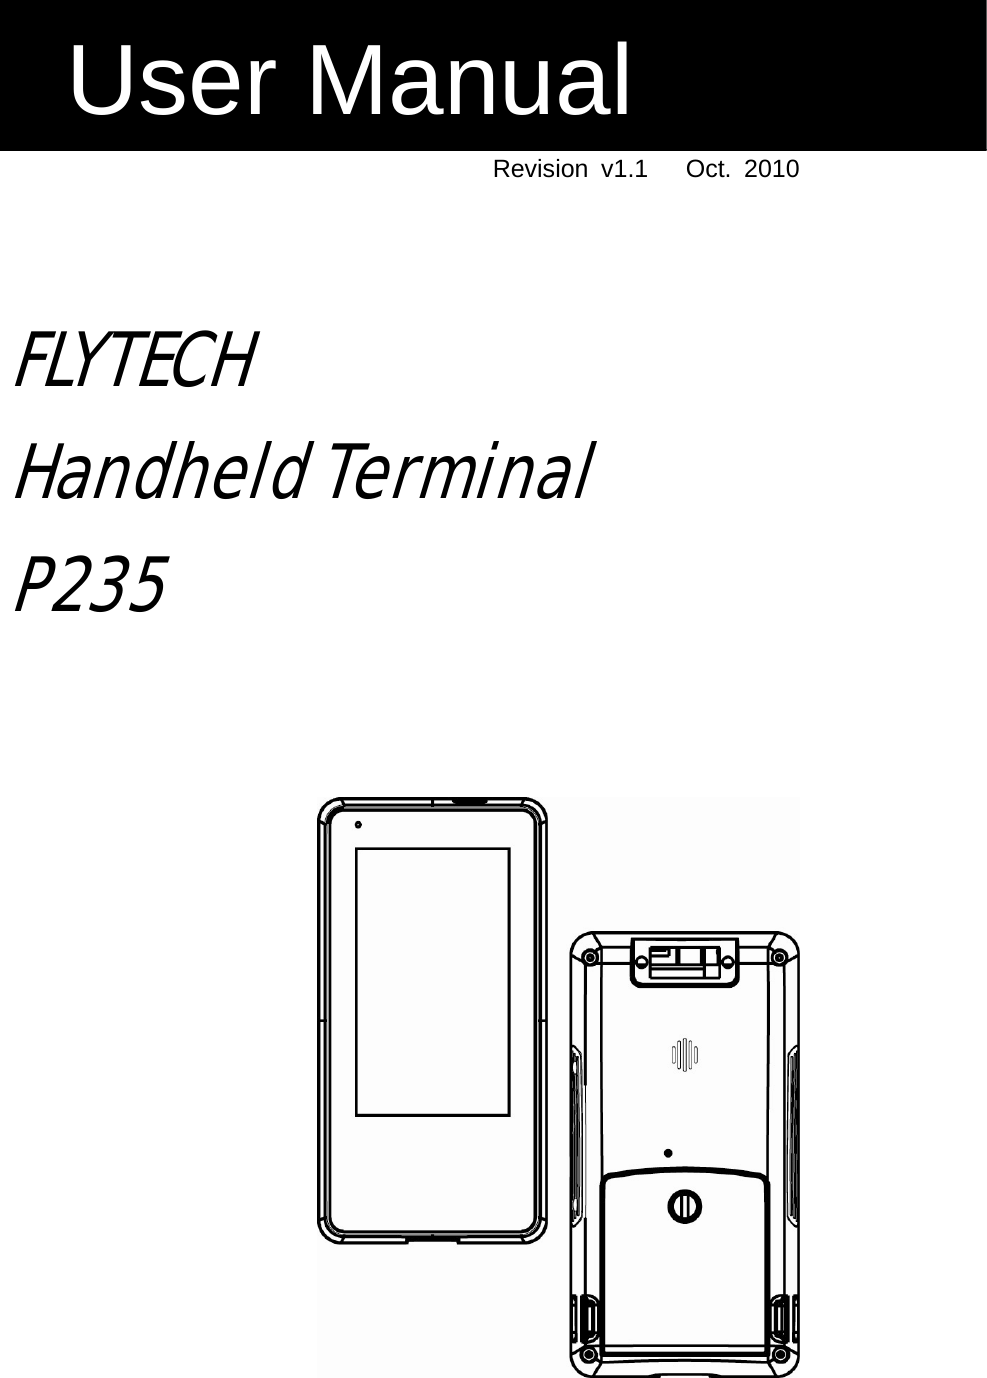  Revision v1.1   Oct. 2010    FLYTECH Handheld Terminal P235       User Manual 